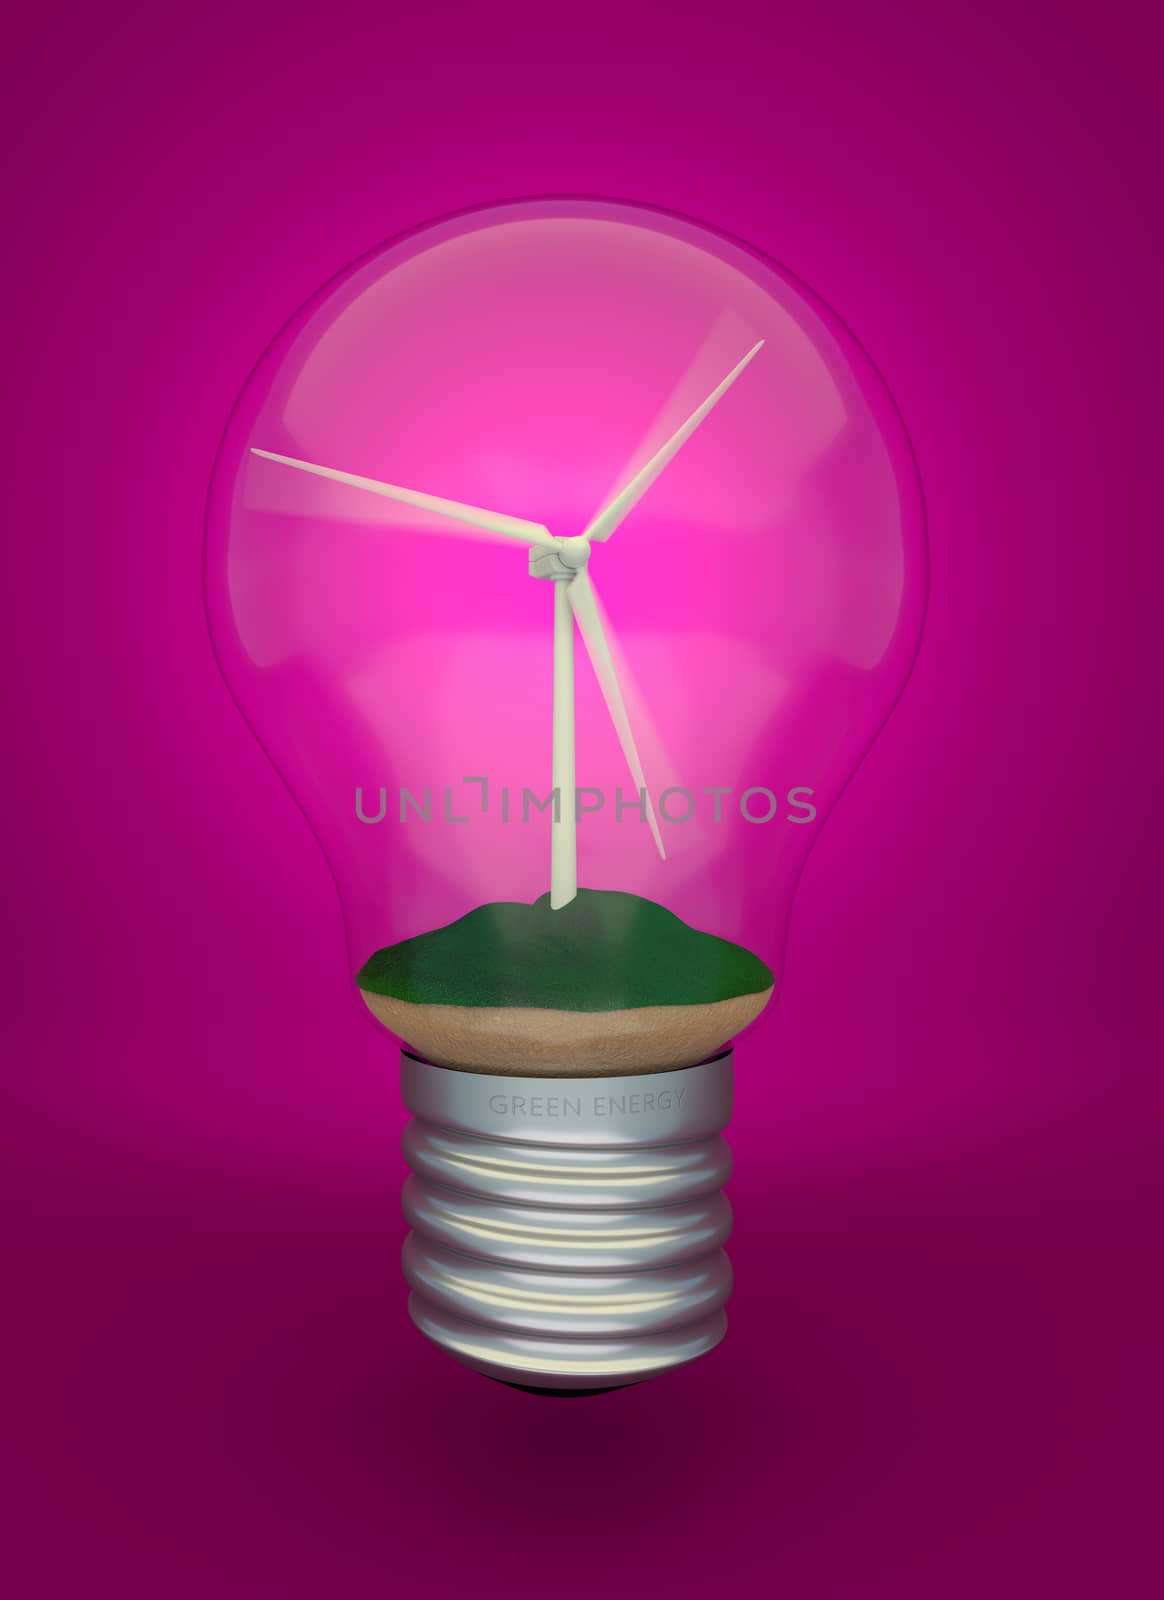  Wind turbine on the grass inside light bulb, eco light bulb